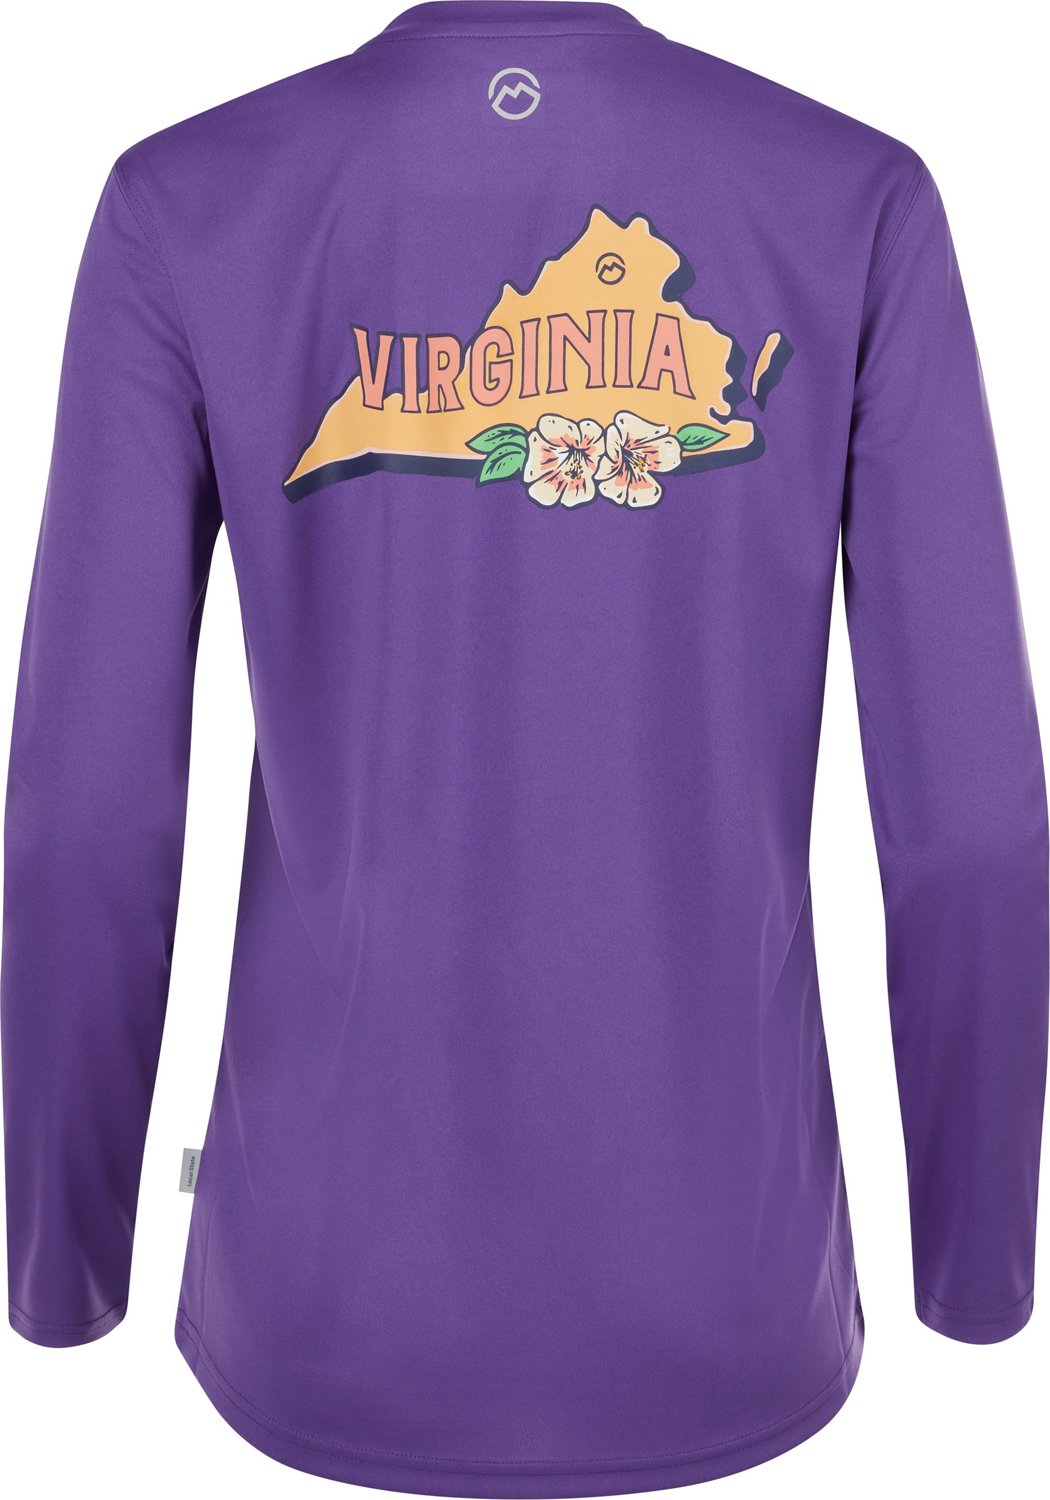 Academy Sports + Outdoors Magellan Outdoors Women's Local State Virginia Long  Sleeve Fishing Shirt